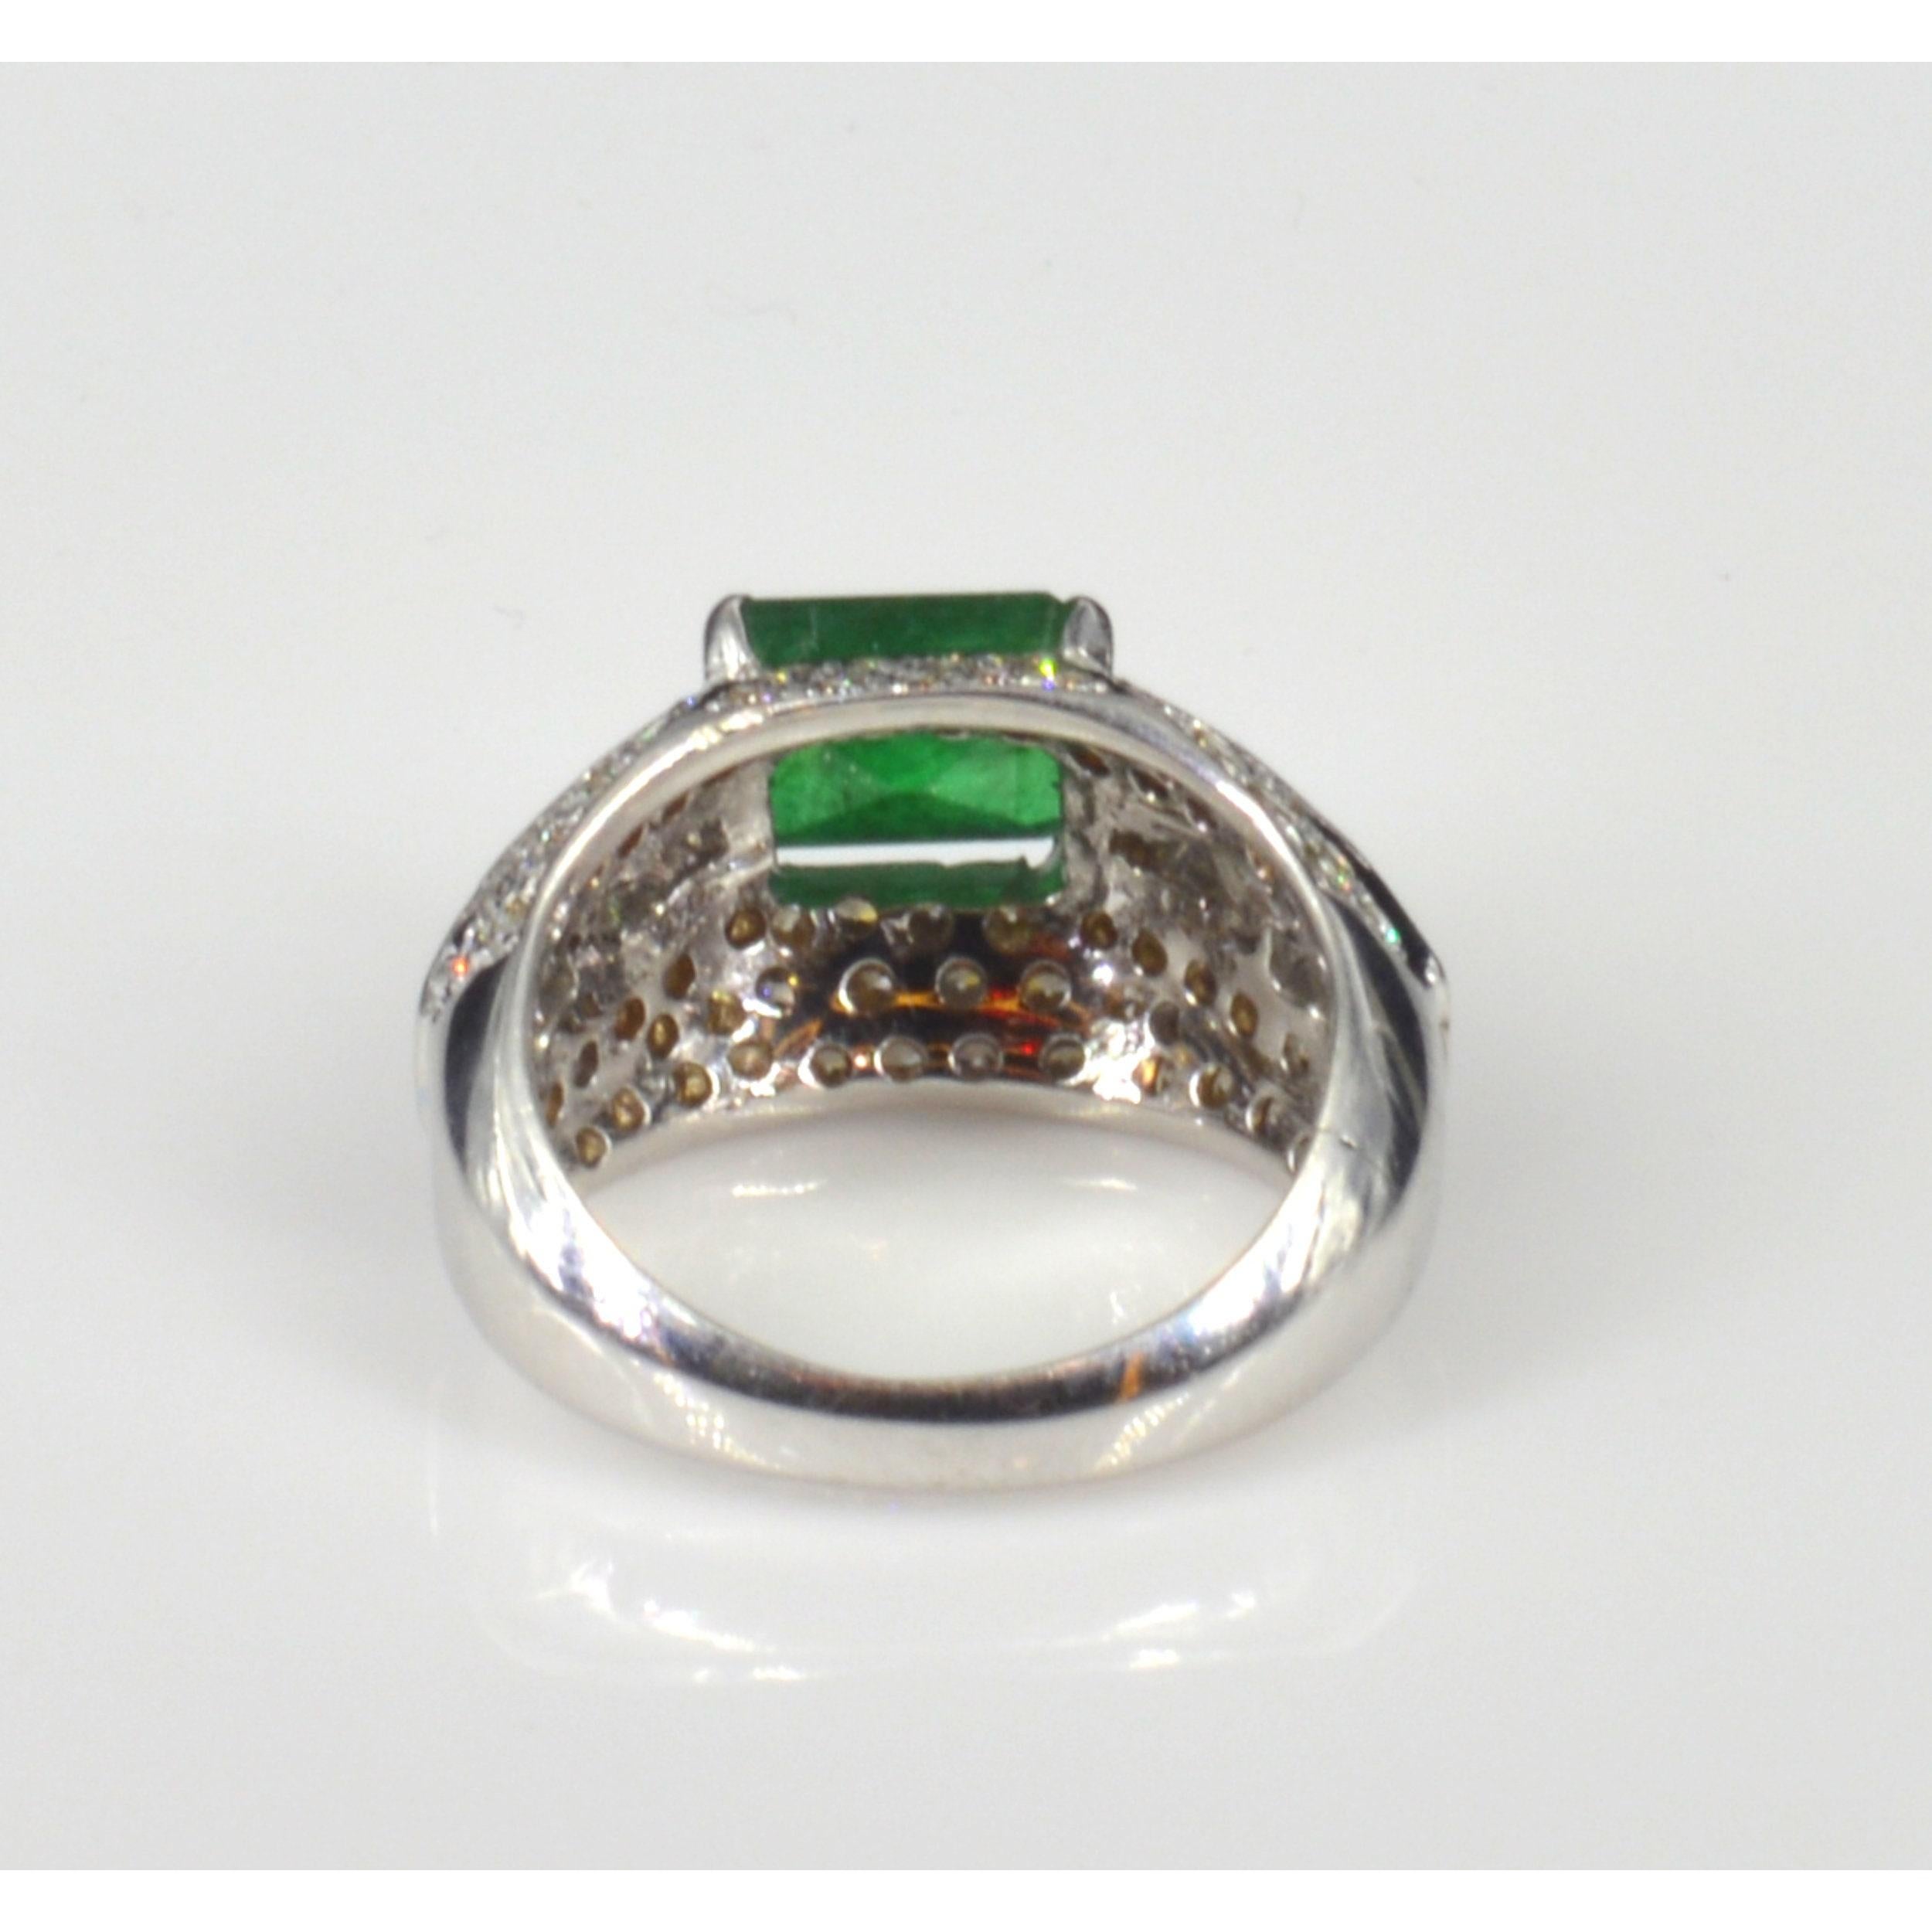 For Sale:  Antique 3 Carat Emerald Diamond Engagement Ring, Art Deco Diamond Wedding Ring 4